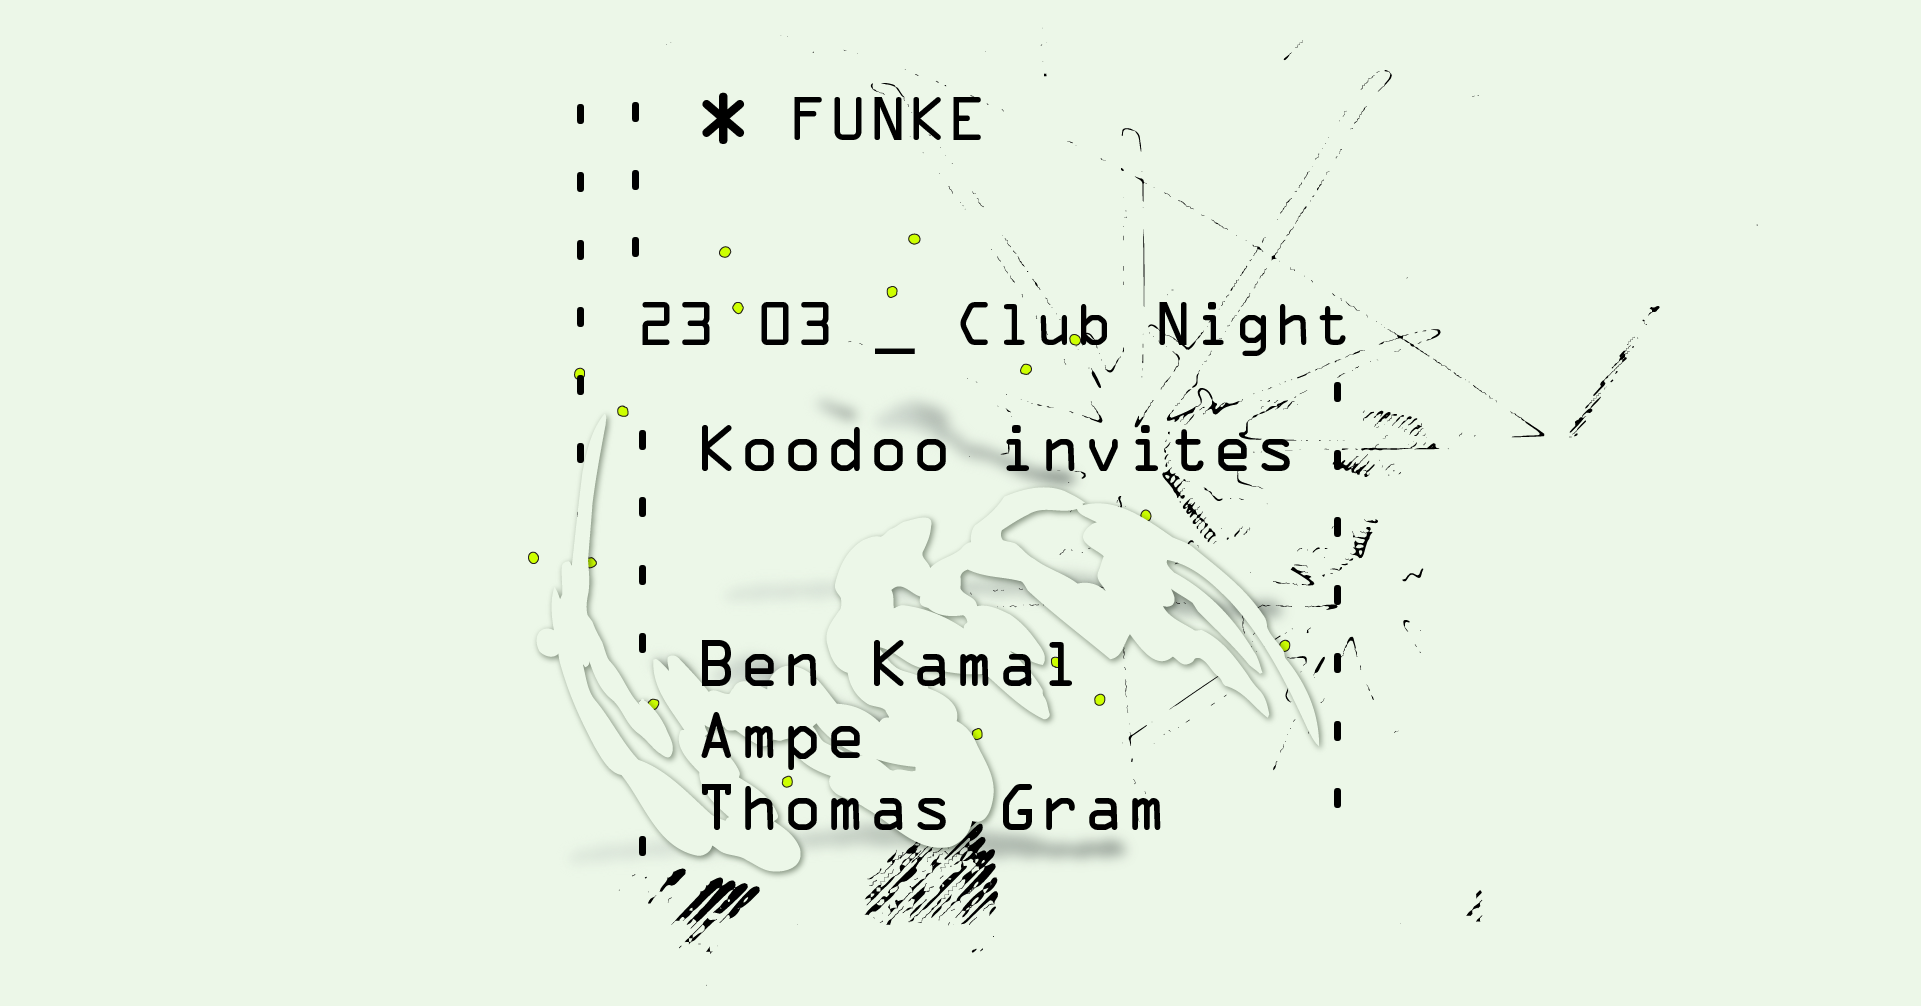 Funke_Koodoo invites Ben Kamal, Ampe, Thomas Gram - フライヤー表